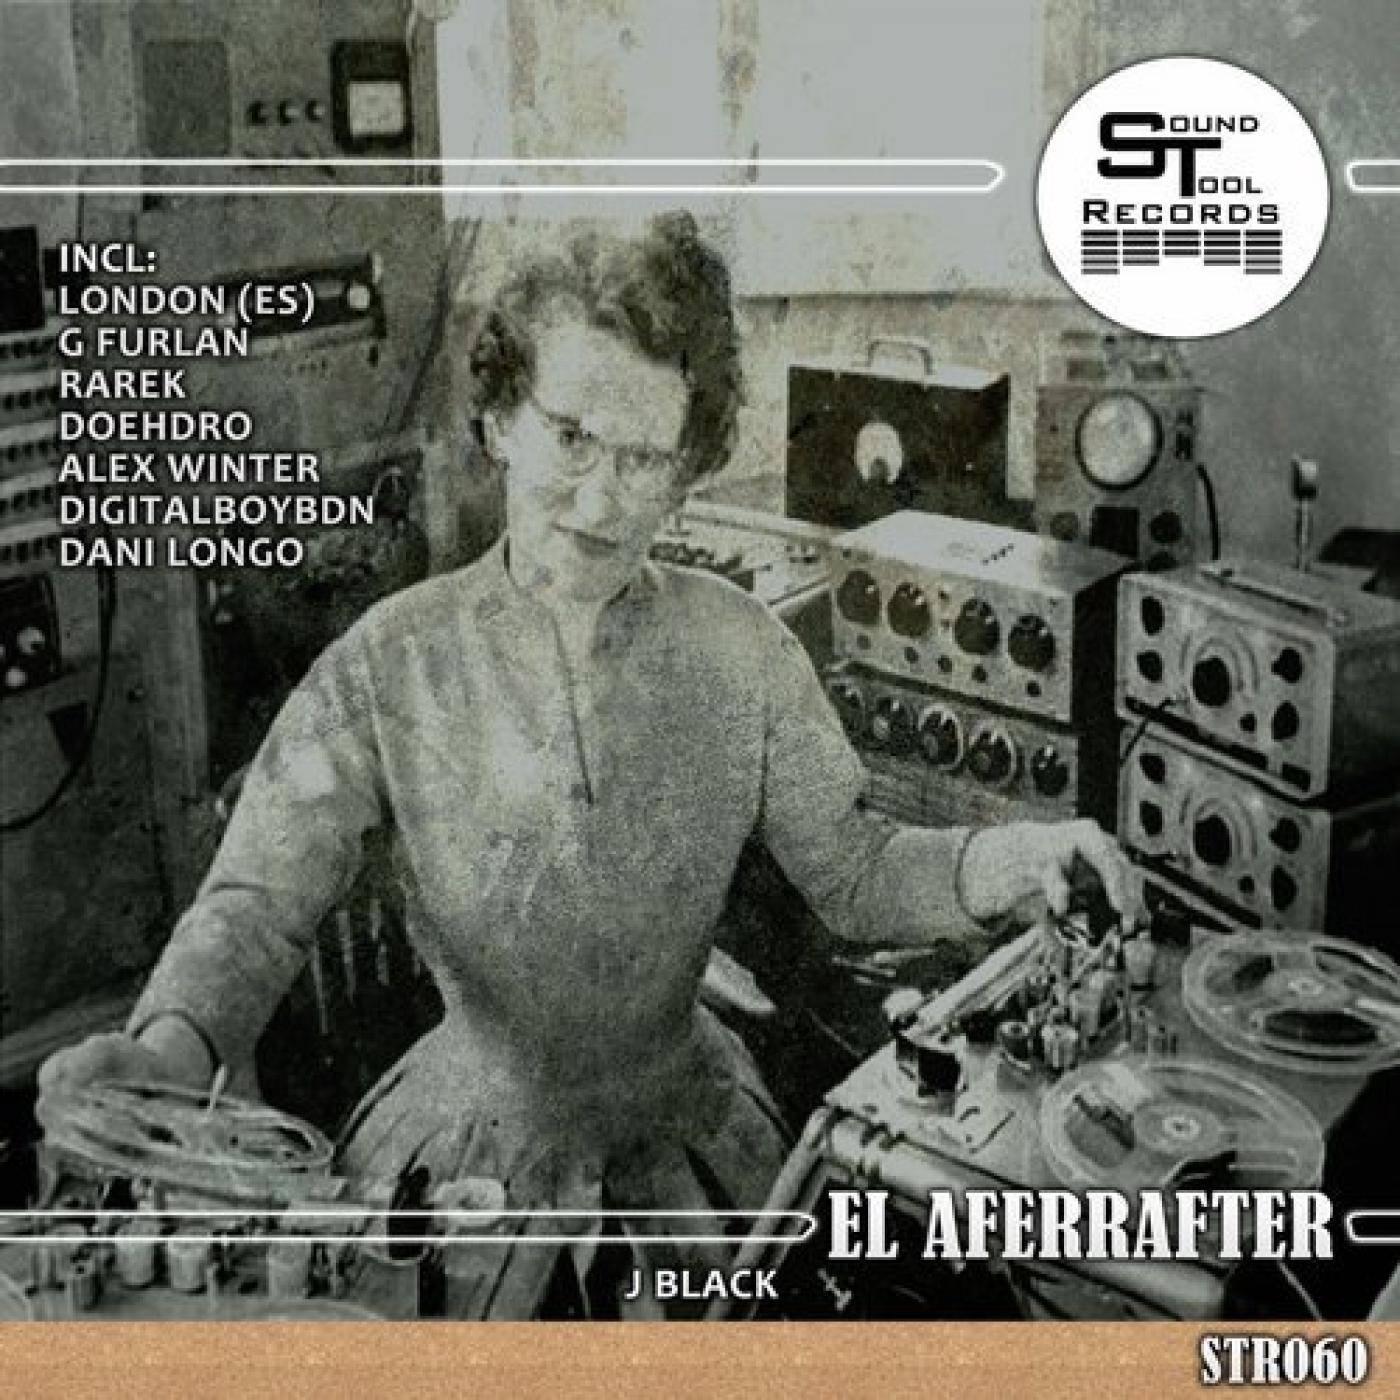 El Aferrafter (G Furlan Remix)